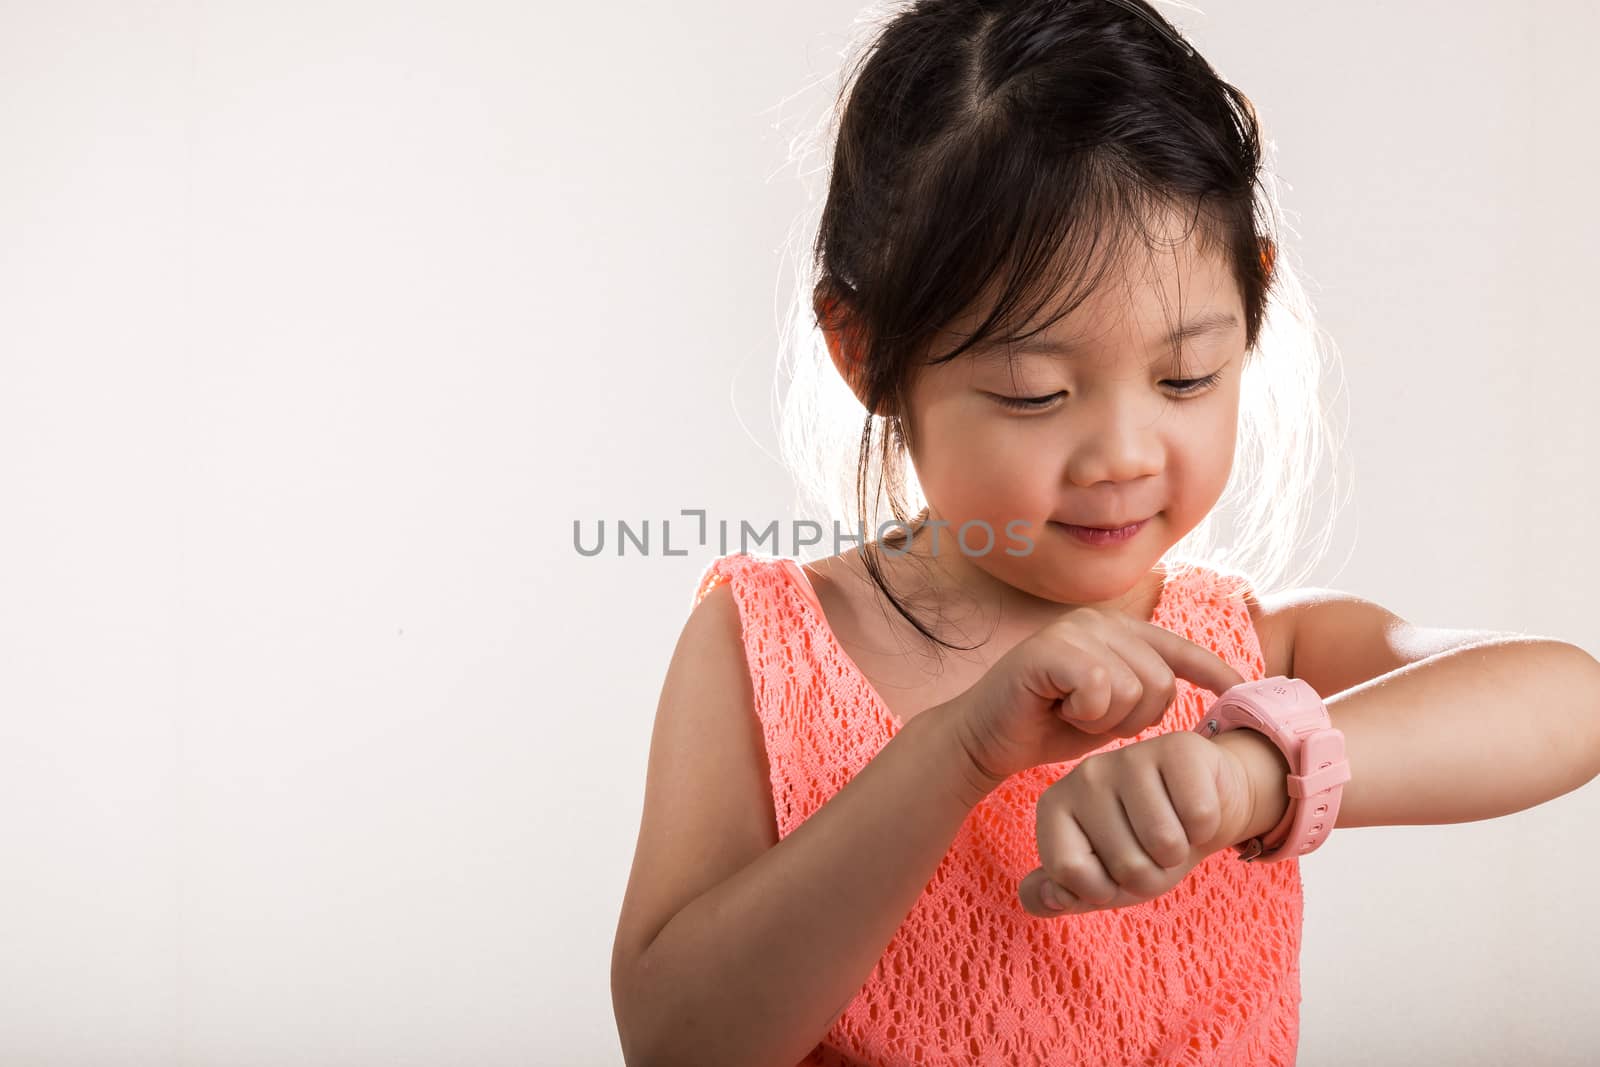 Child with Smartwatch / Child Using Smartwatch Background by supparsorn